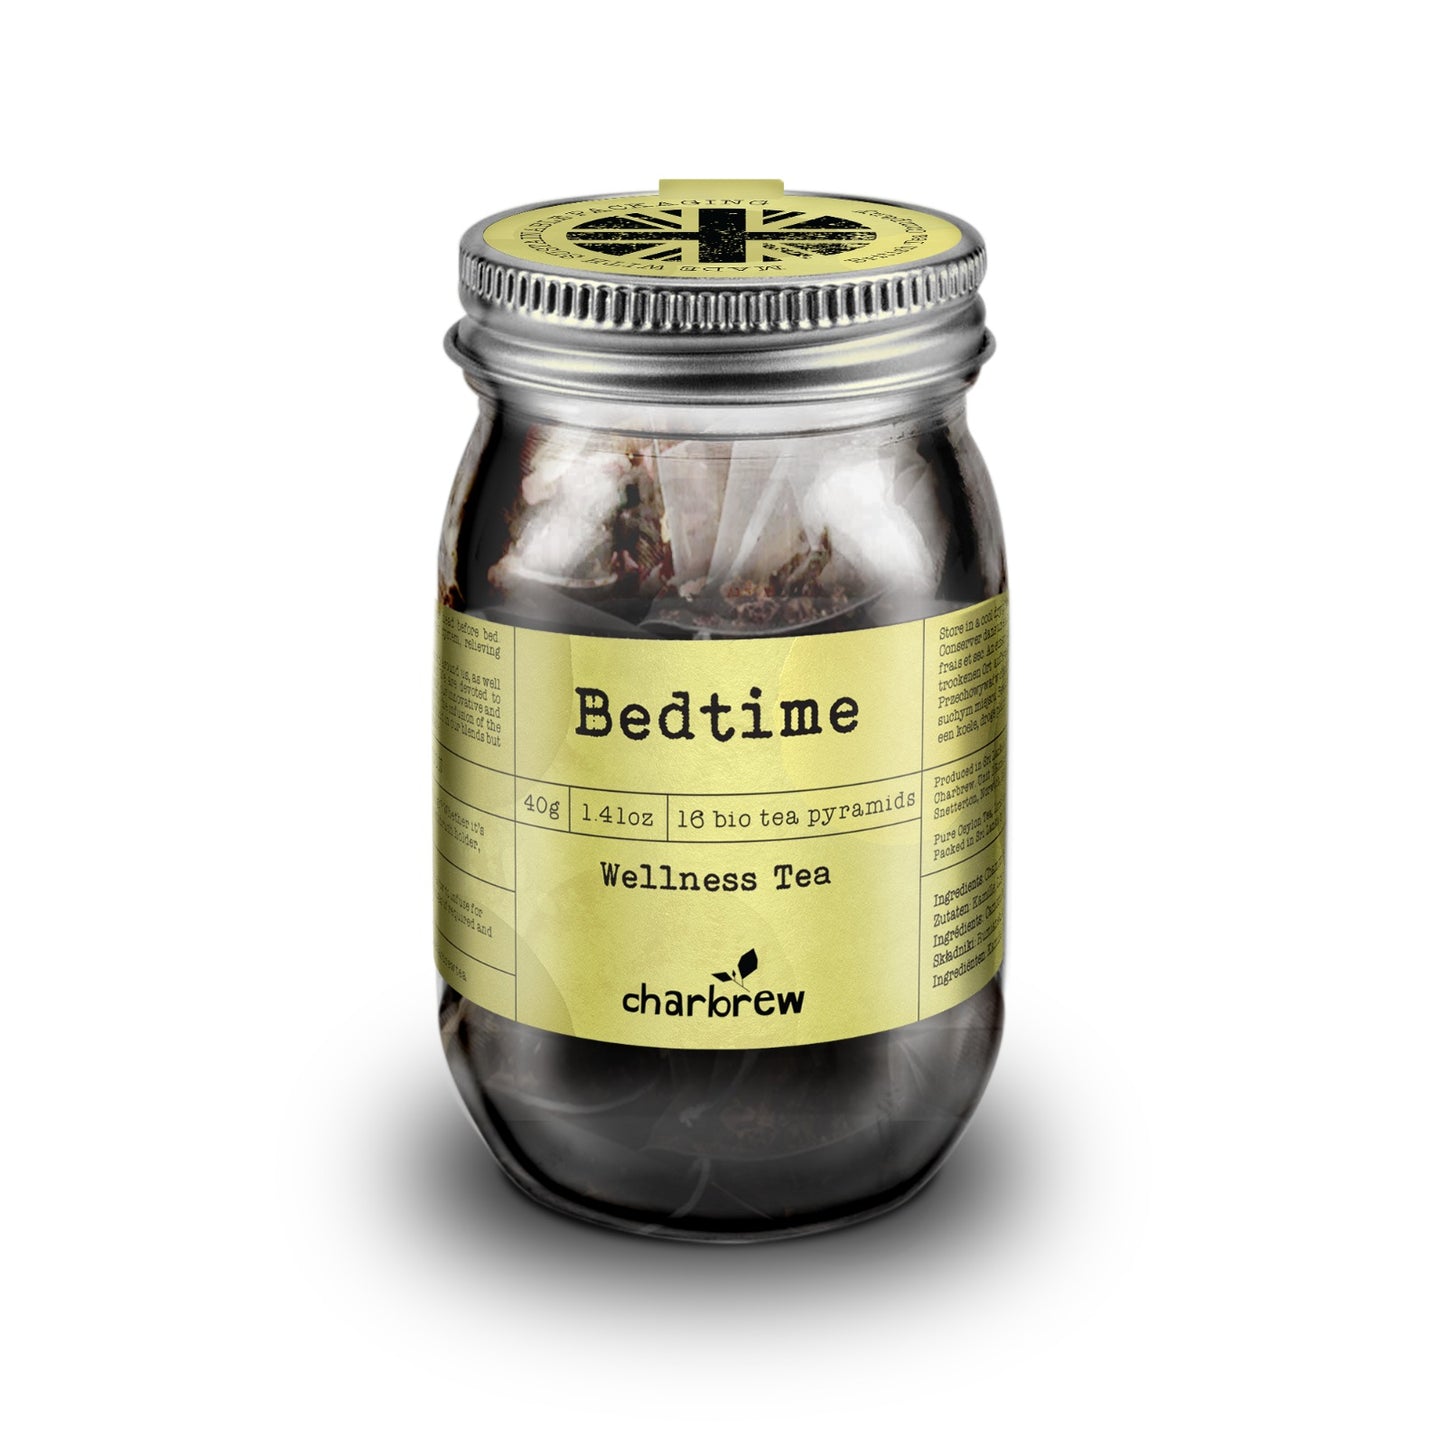 Bedtime Wellness Tea Bags Mason Jar - 16 Biodegradable Pyramid Bags